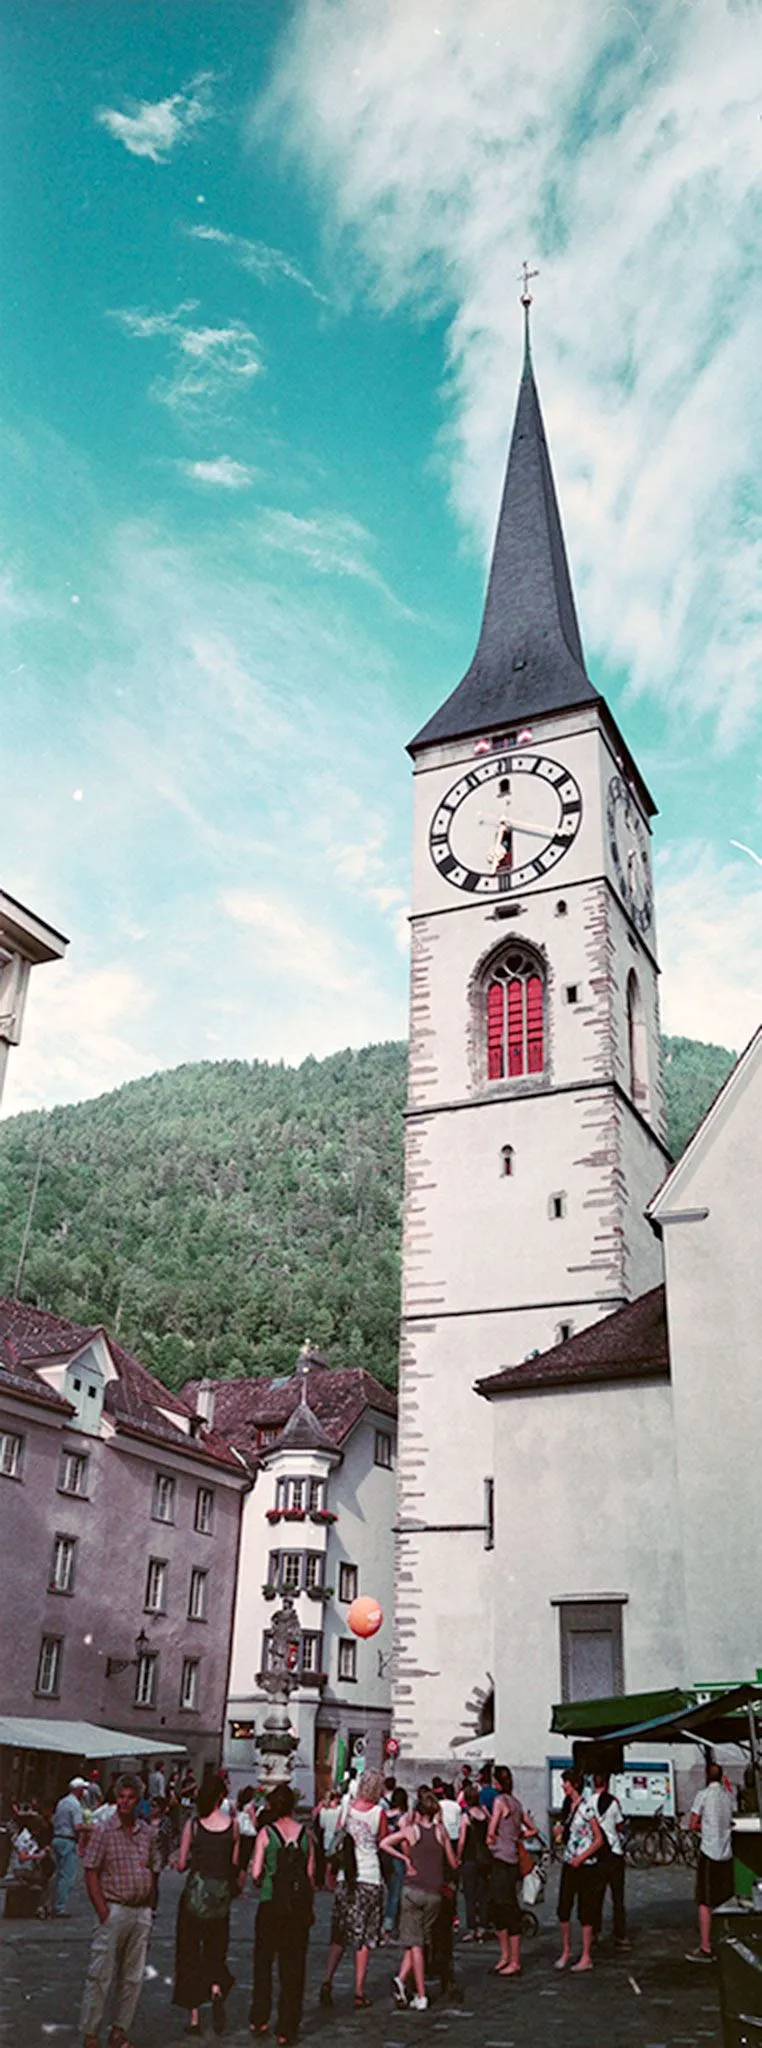 Martinskirche featured image